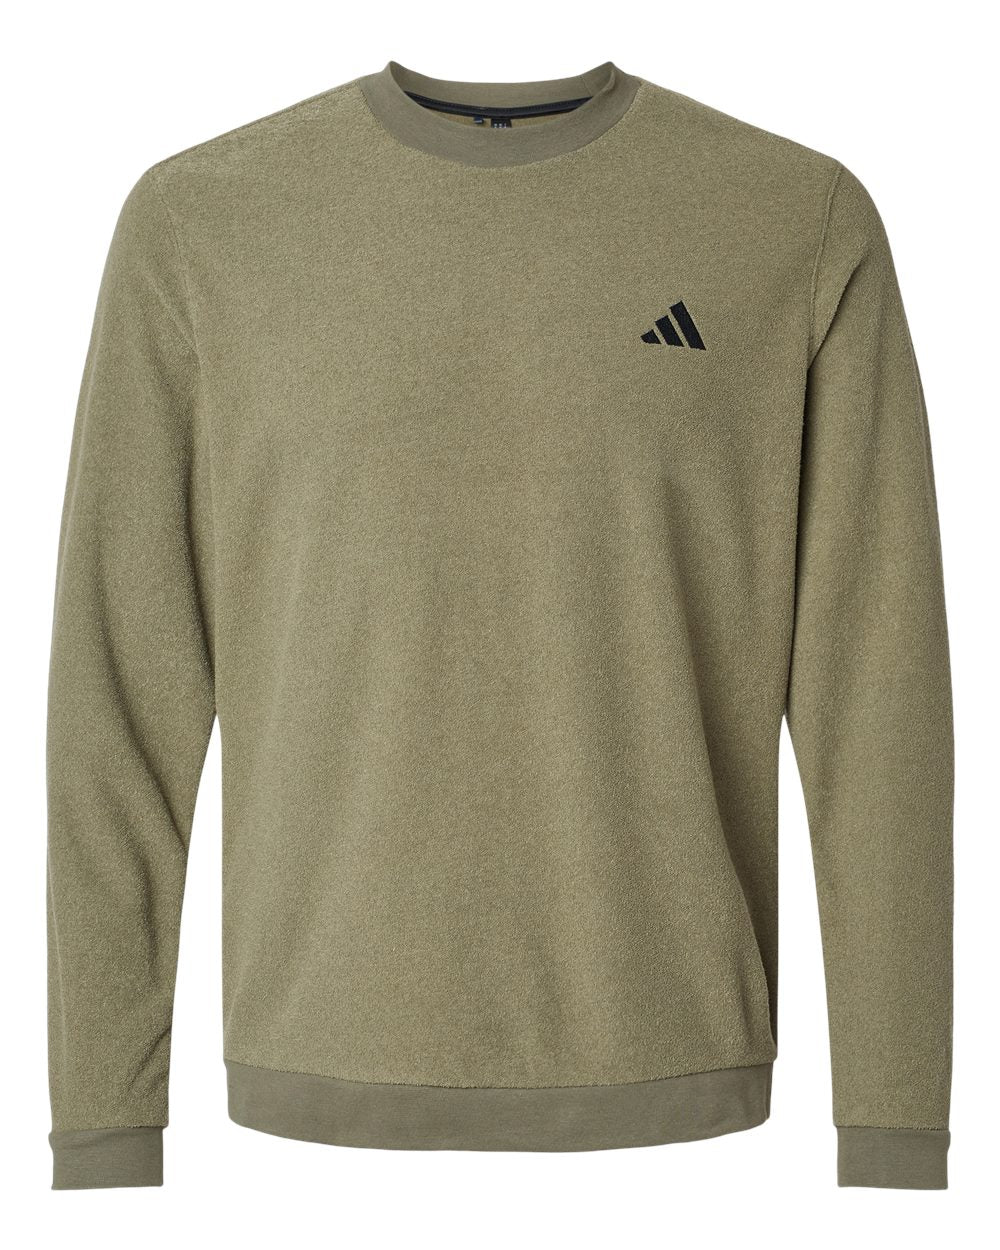 Adidas A586 Crewneck Sweatshirt #color_Olive Strata